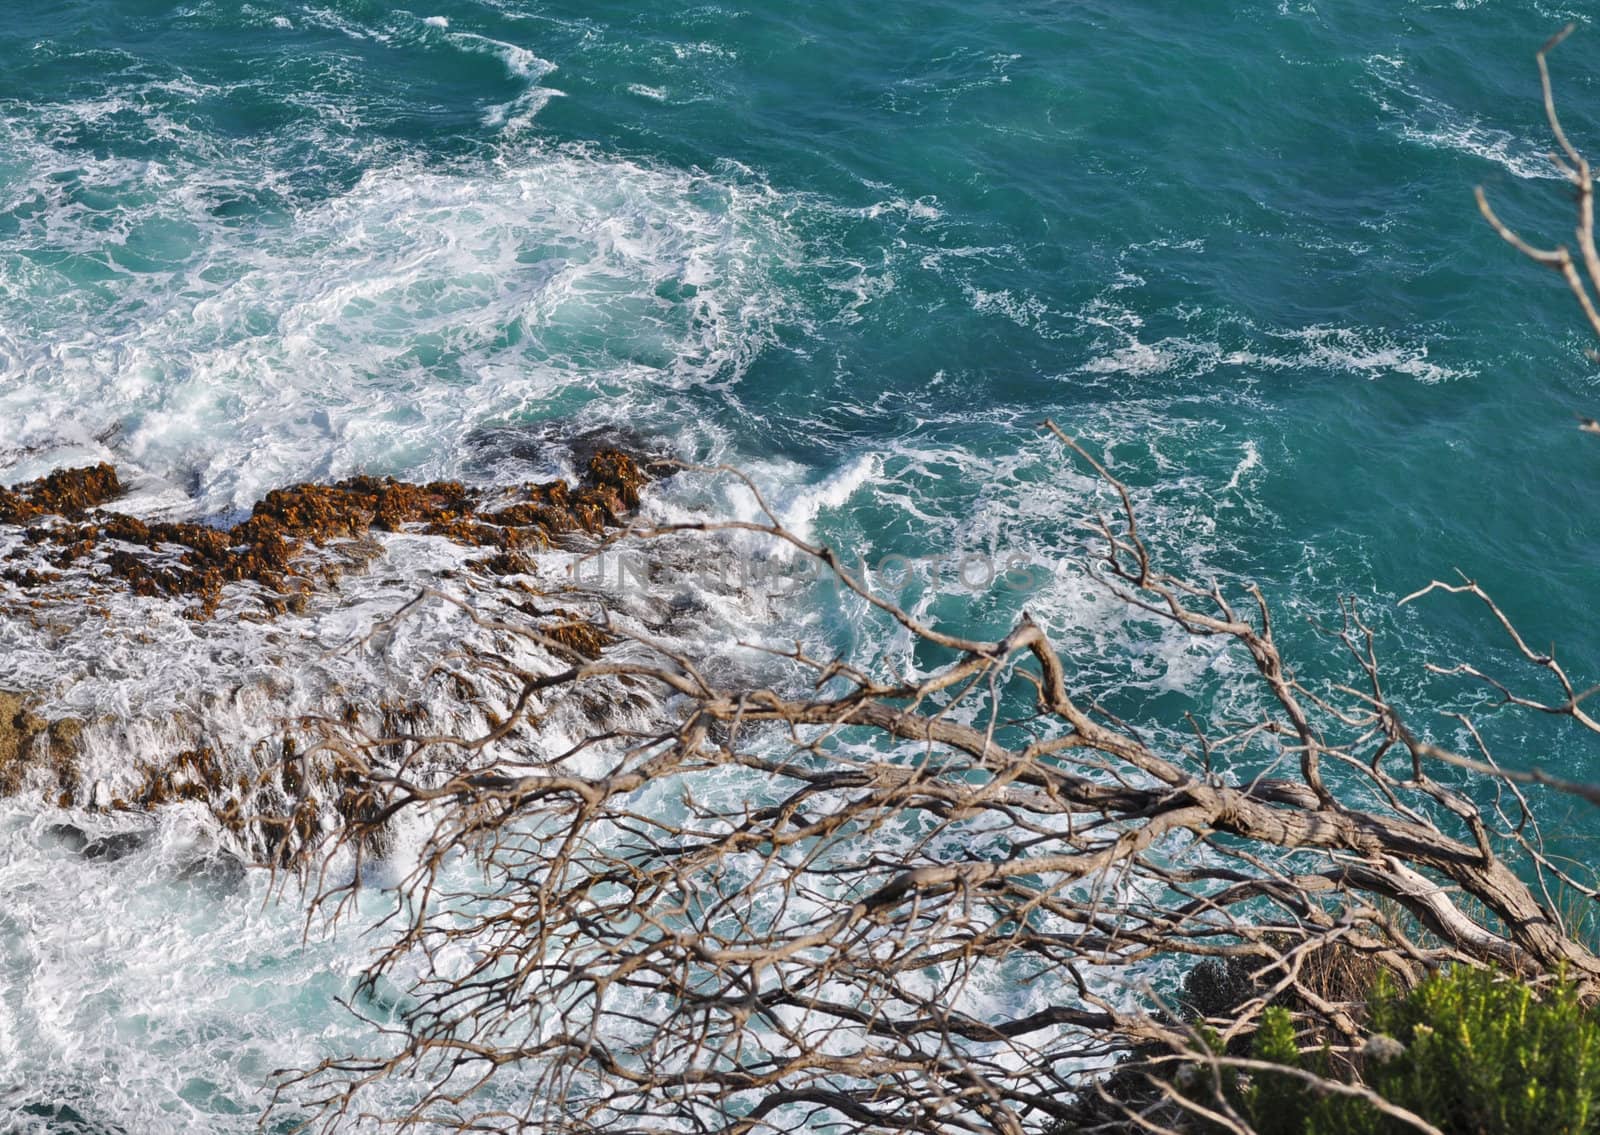 Old tree branch with Big ocean waves background. Great Ocean Road, Australia